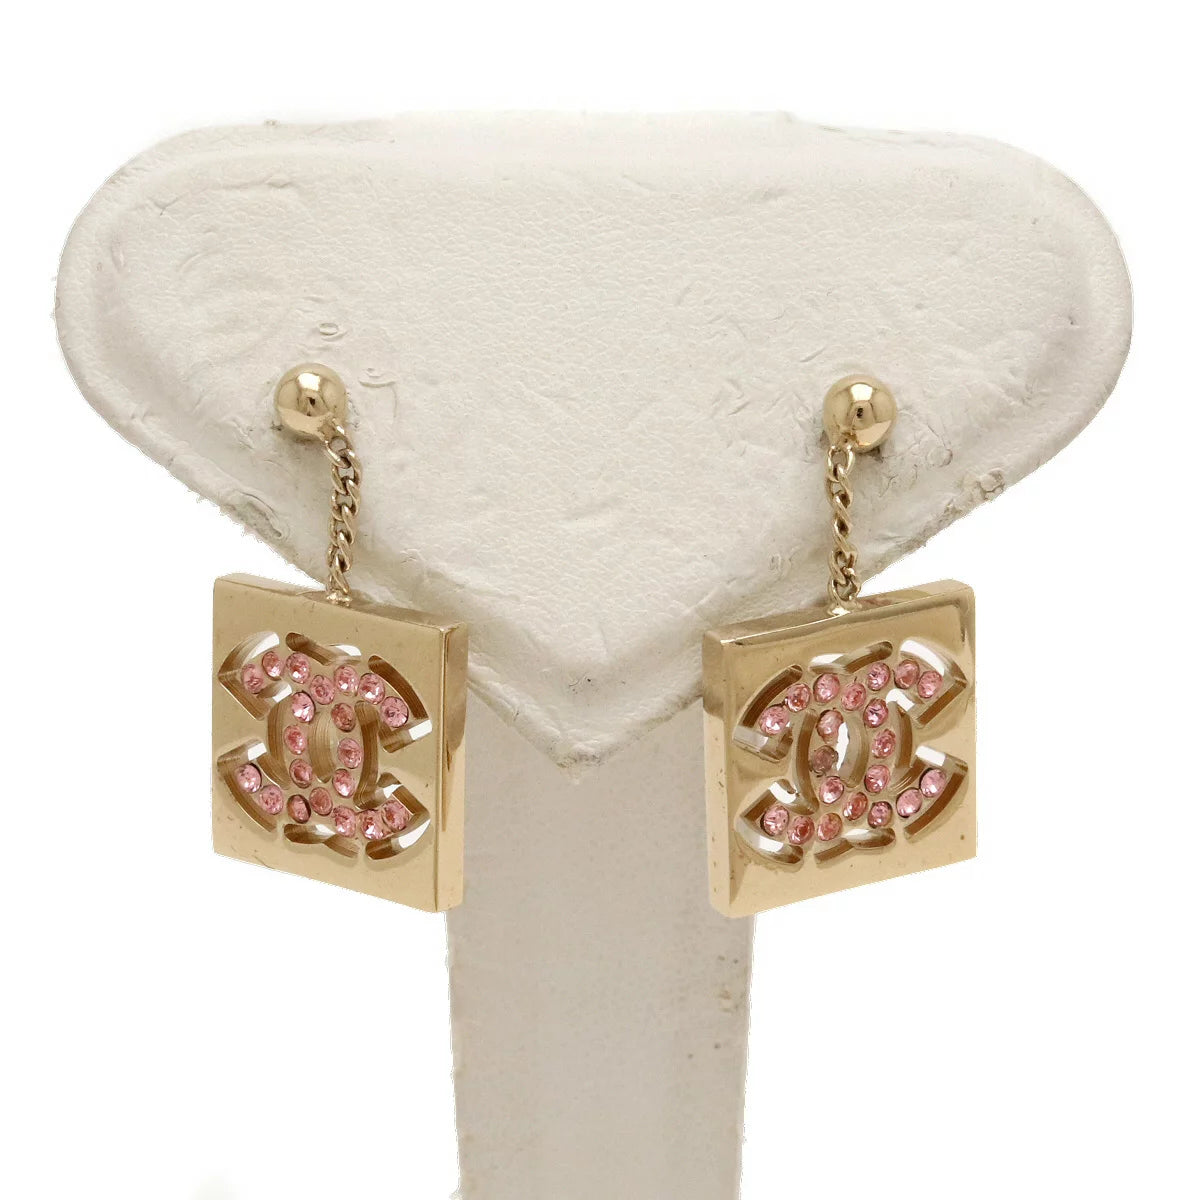 chanel clover earrings